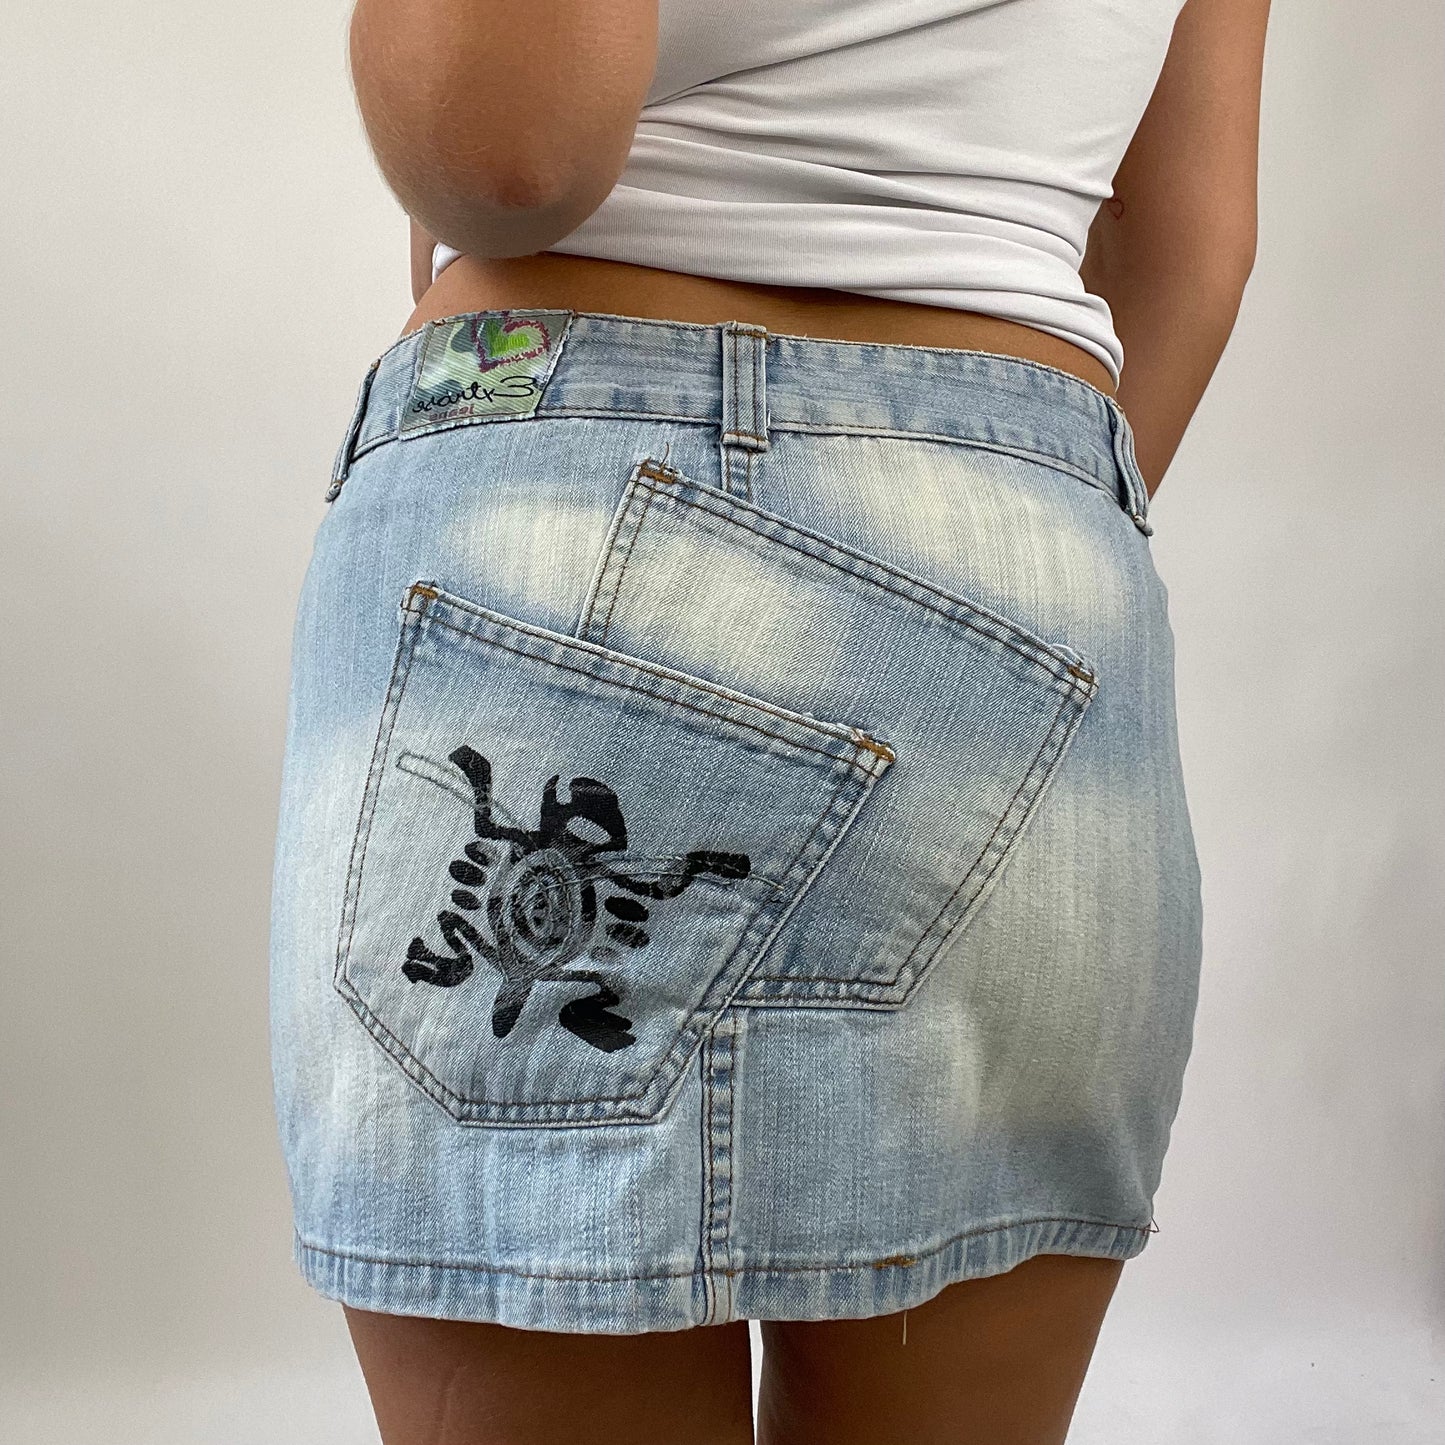 MANHATTAN GIRL DROP | small denim mini skirt with graphic pocket